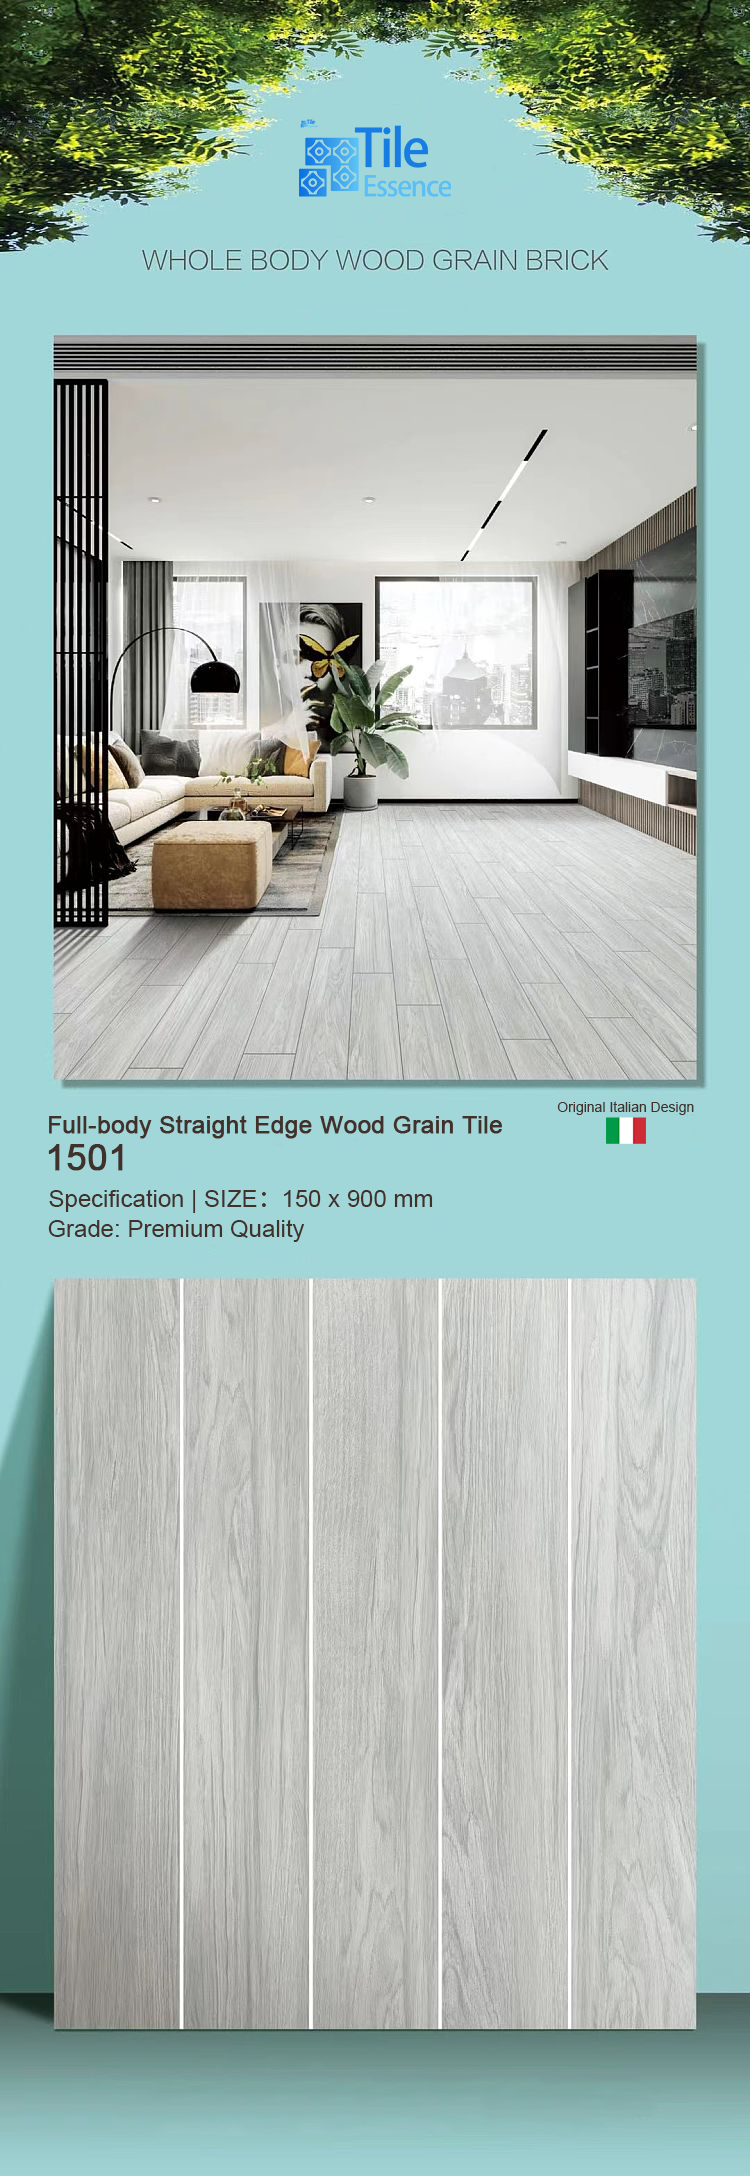 Light Gray Wood Grain Floor Porcelain Tile  Product Details